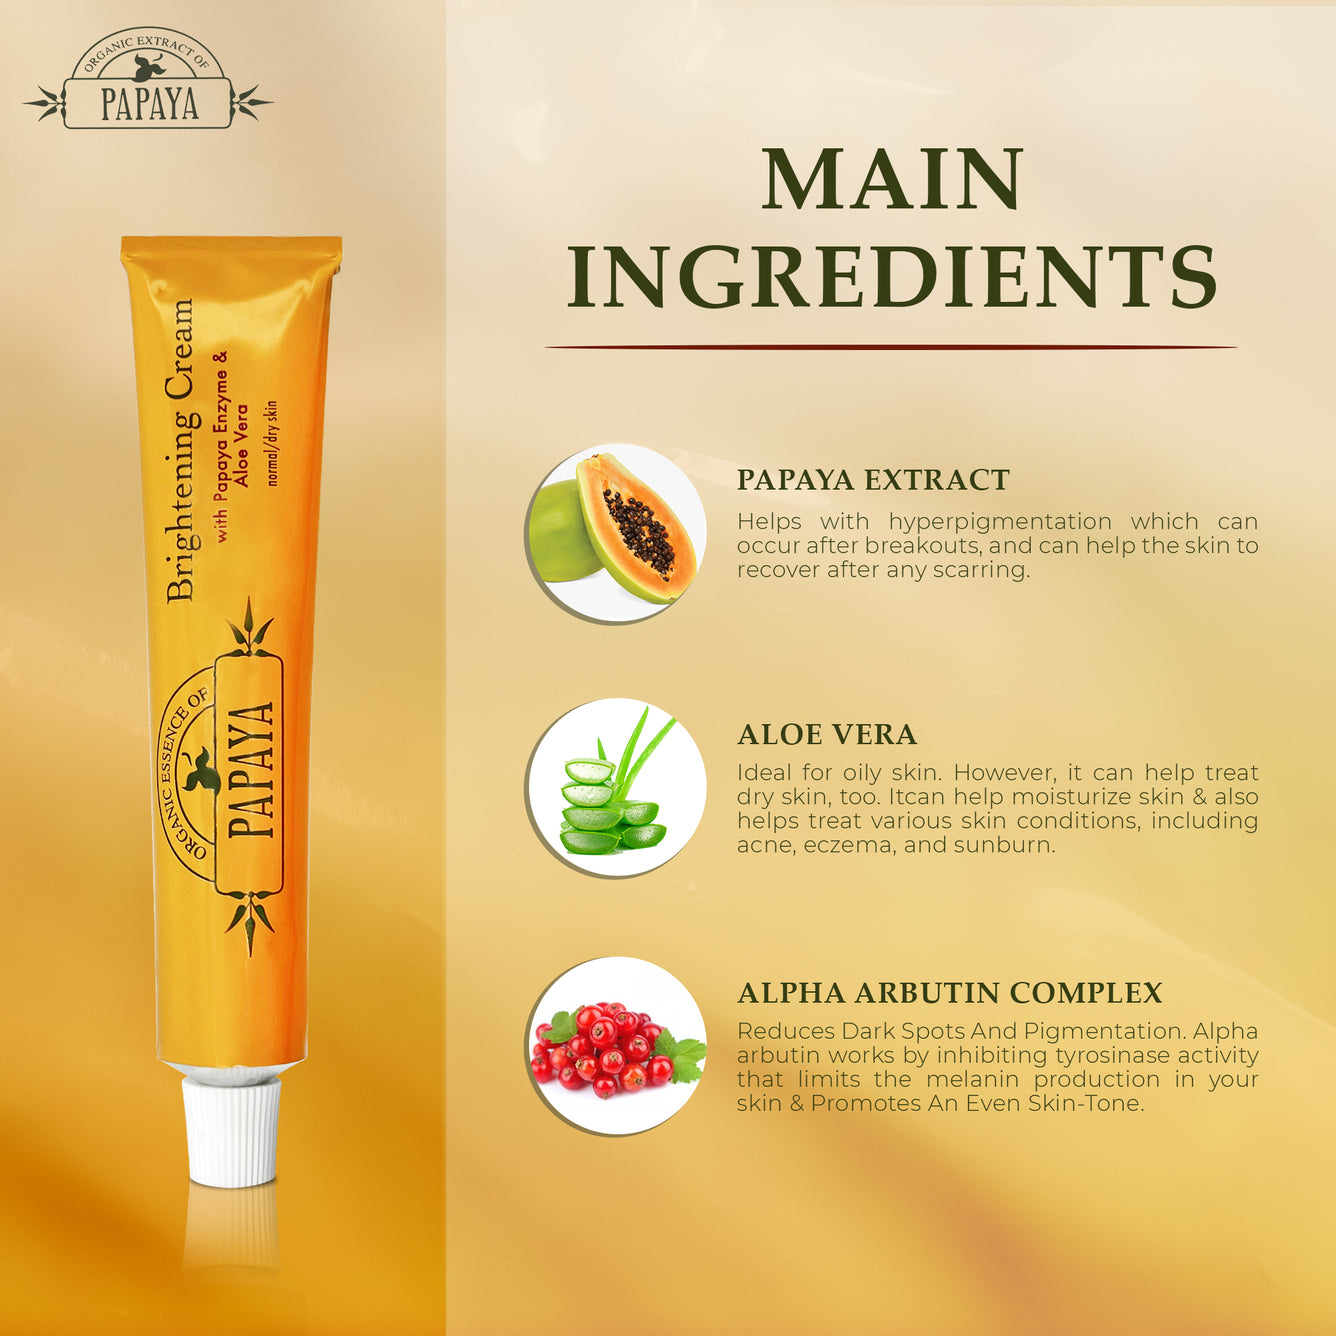 Organic Essence of Papaya cream tube 50ML